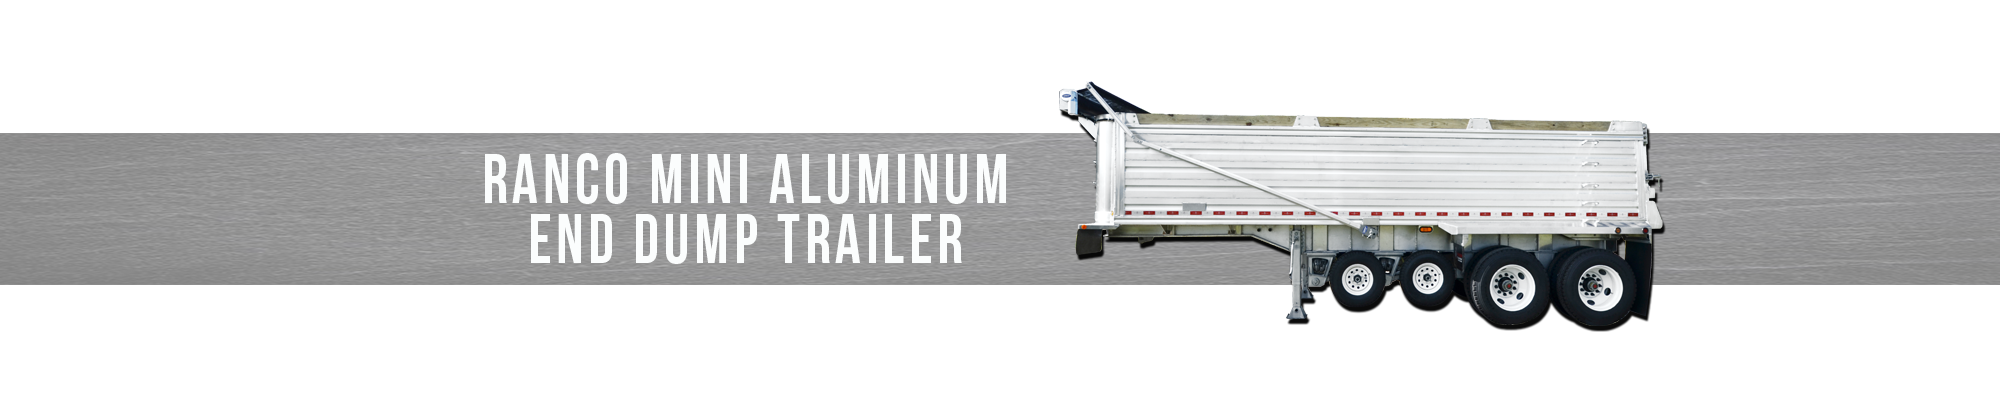 RANCO Mini Aluminum End Dump Trailer